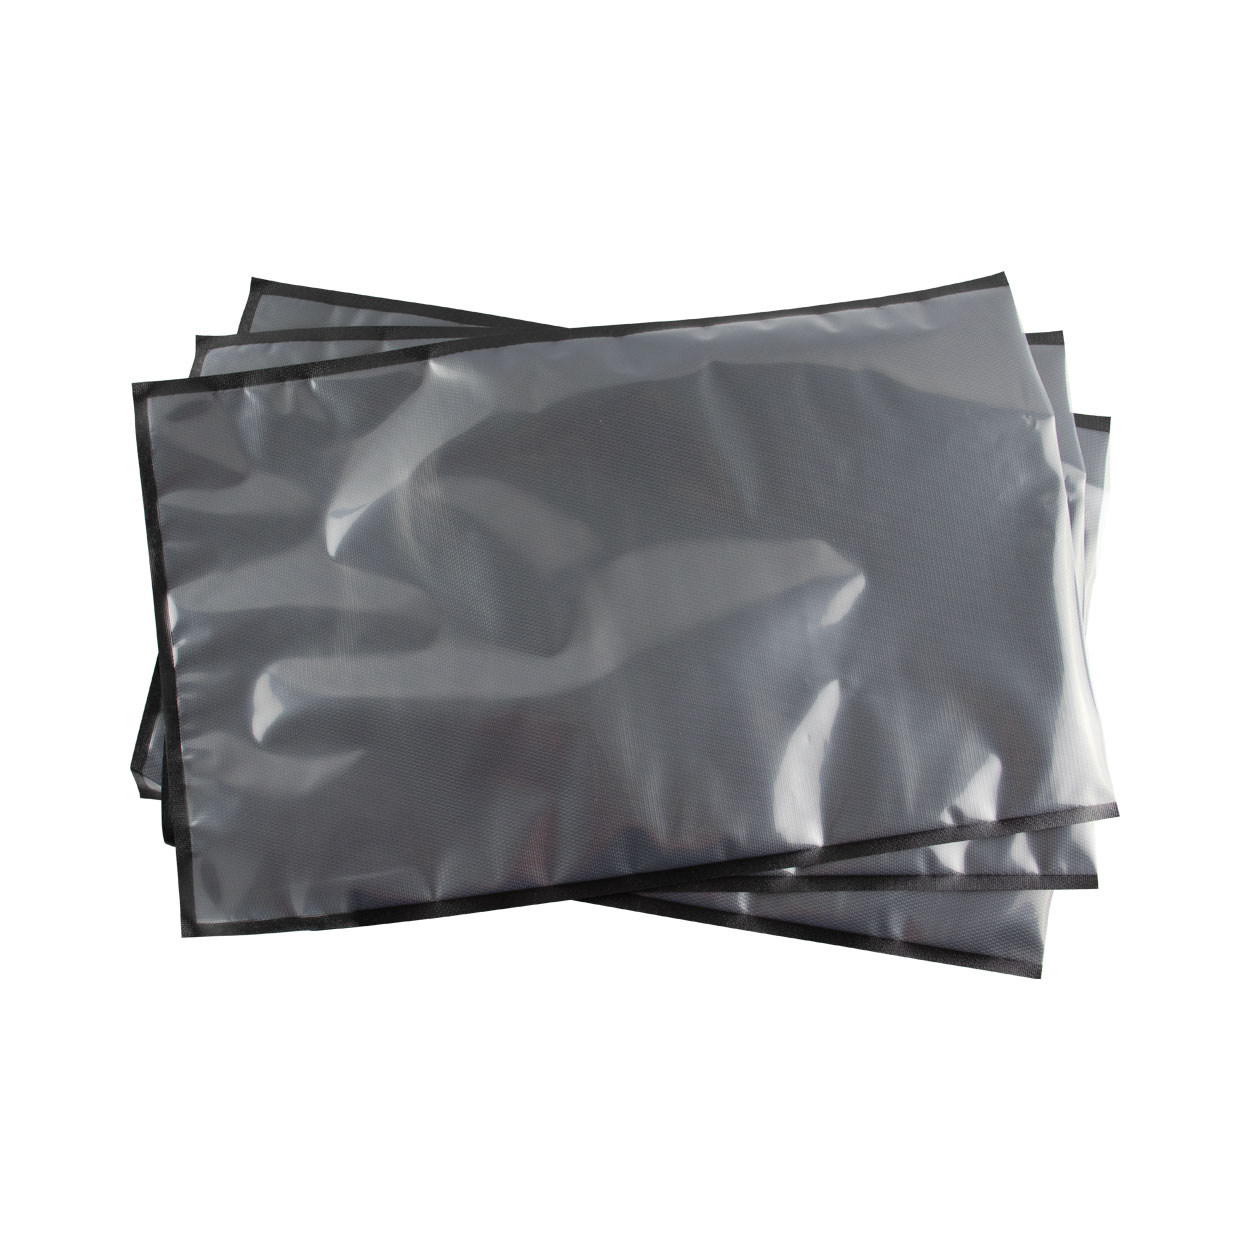 Blackshell® Universal Lackschutzfolie transparent 30cm x 100cm